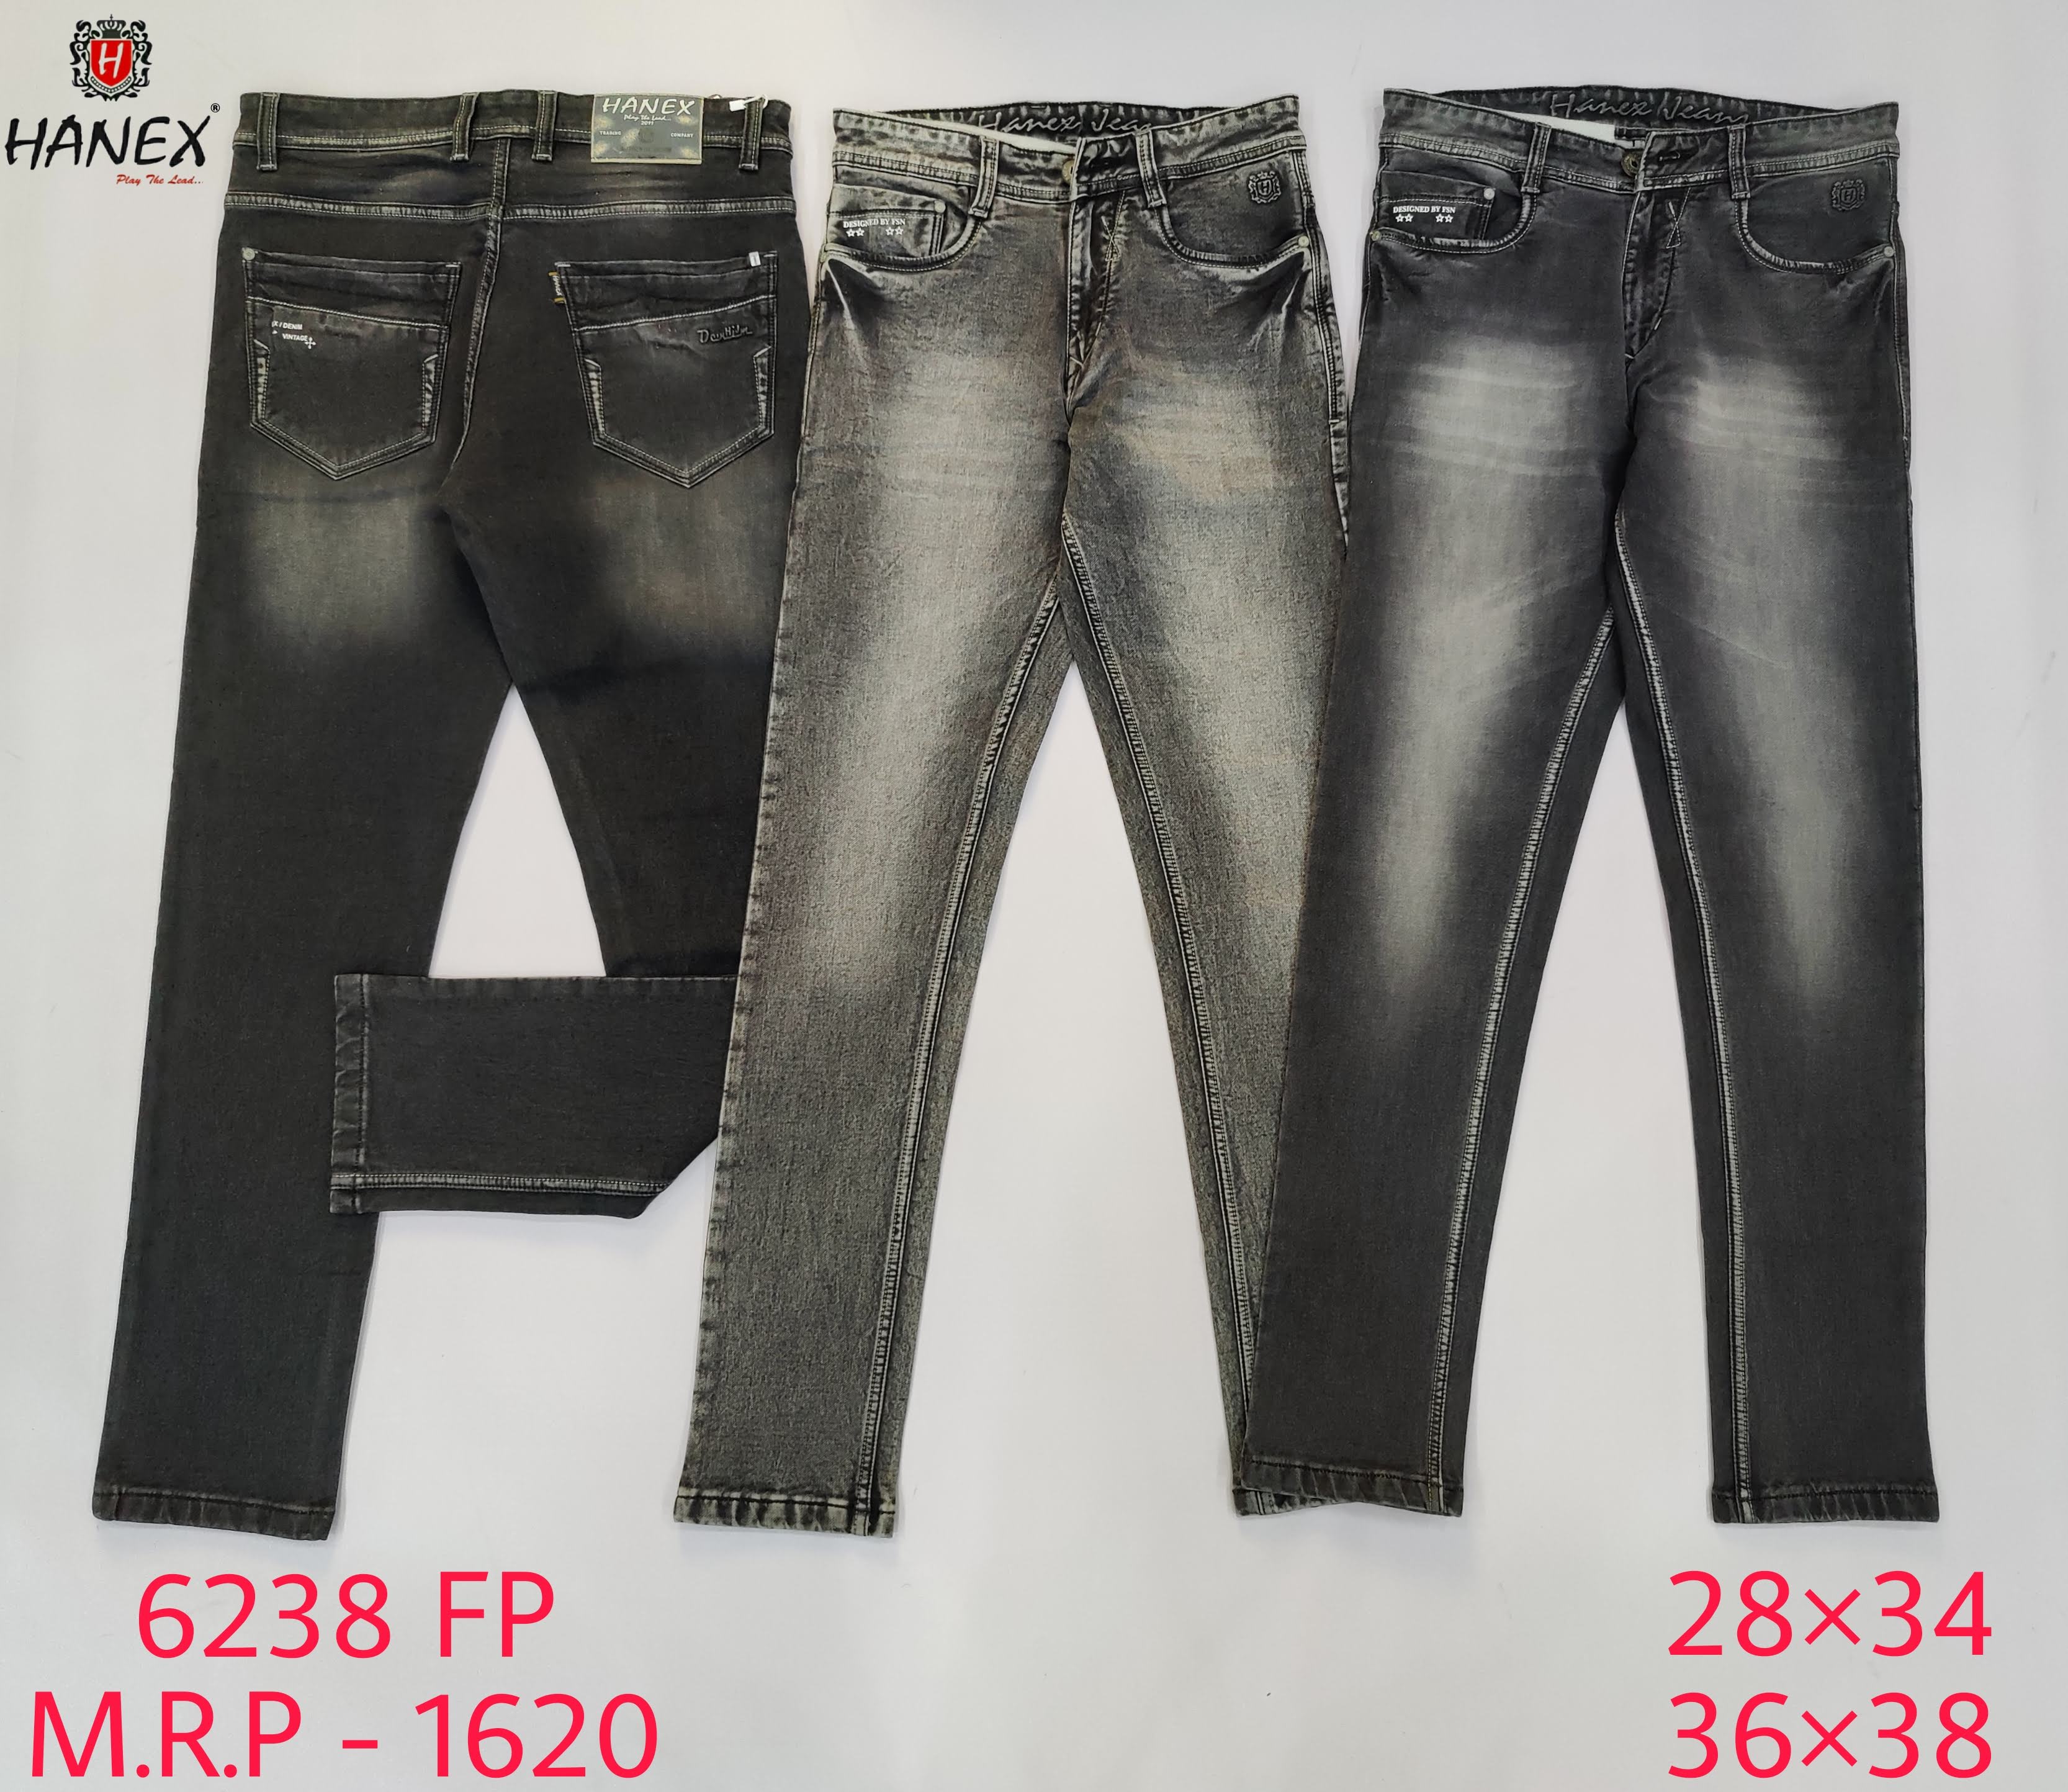 Hanex Distressed Denim Jeans